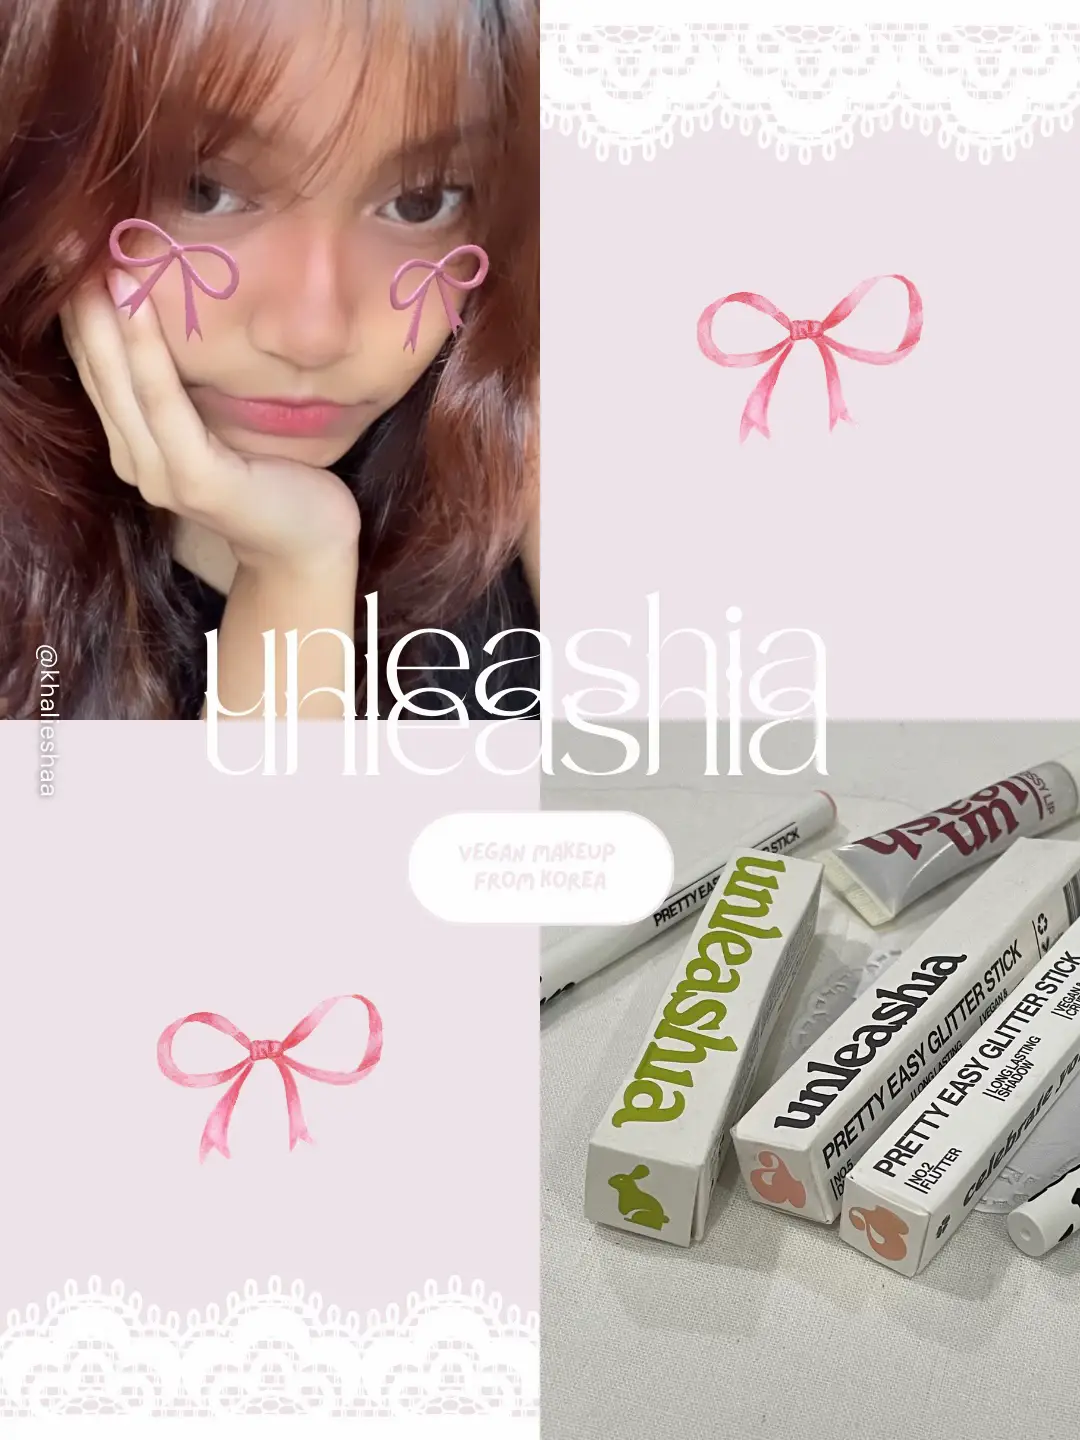 UNLEASHIA Popular Korean Cosmetics・Recommends UNLEASHIA